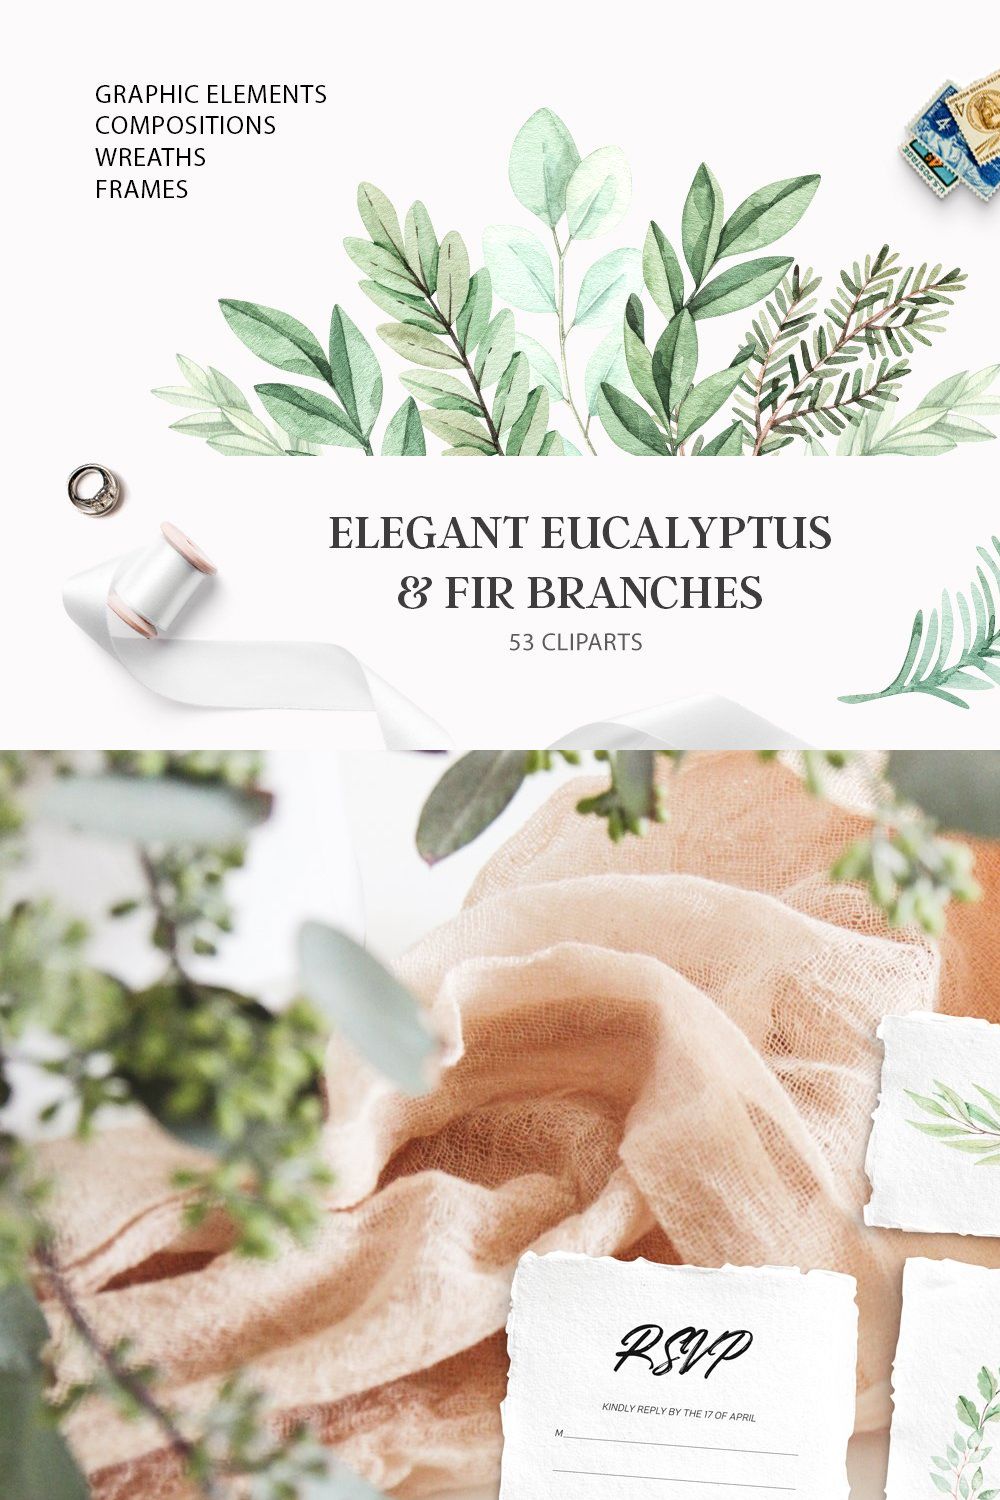 Elegant eucalyptus & fir branches pinterest preview image.